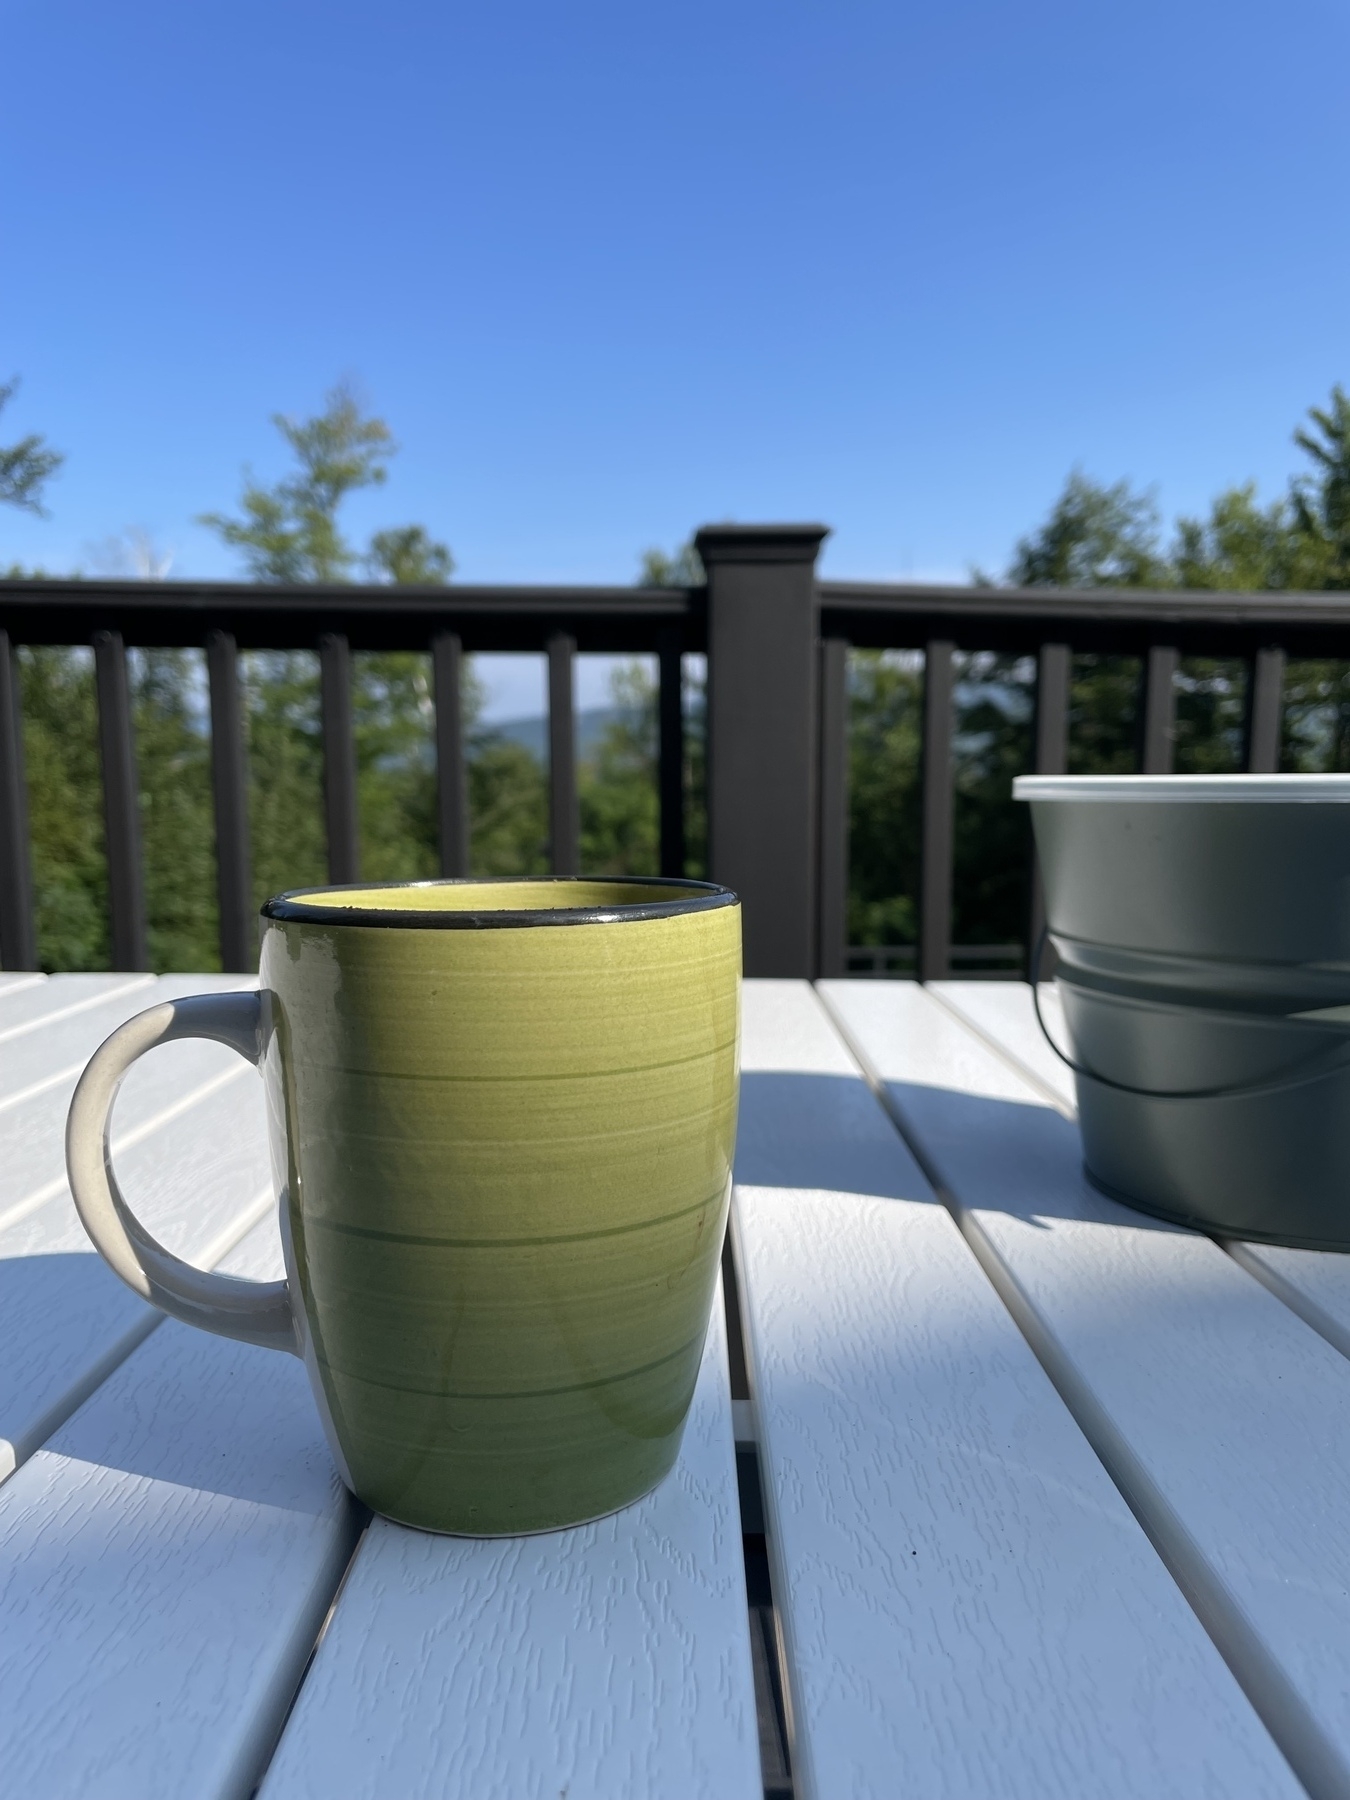 Coffee mug on a porch table